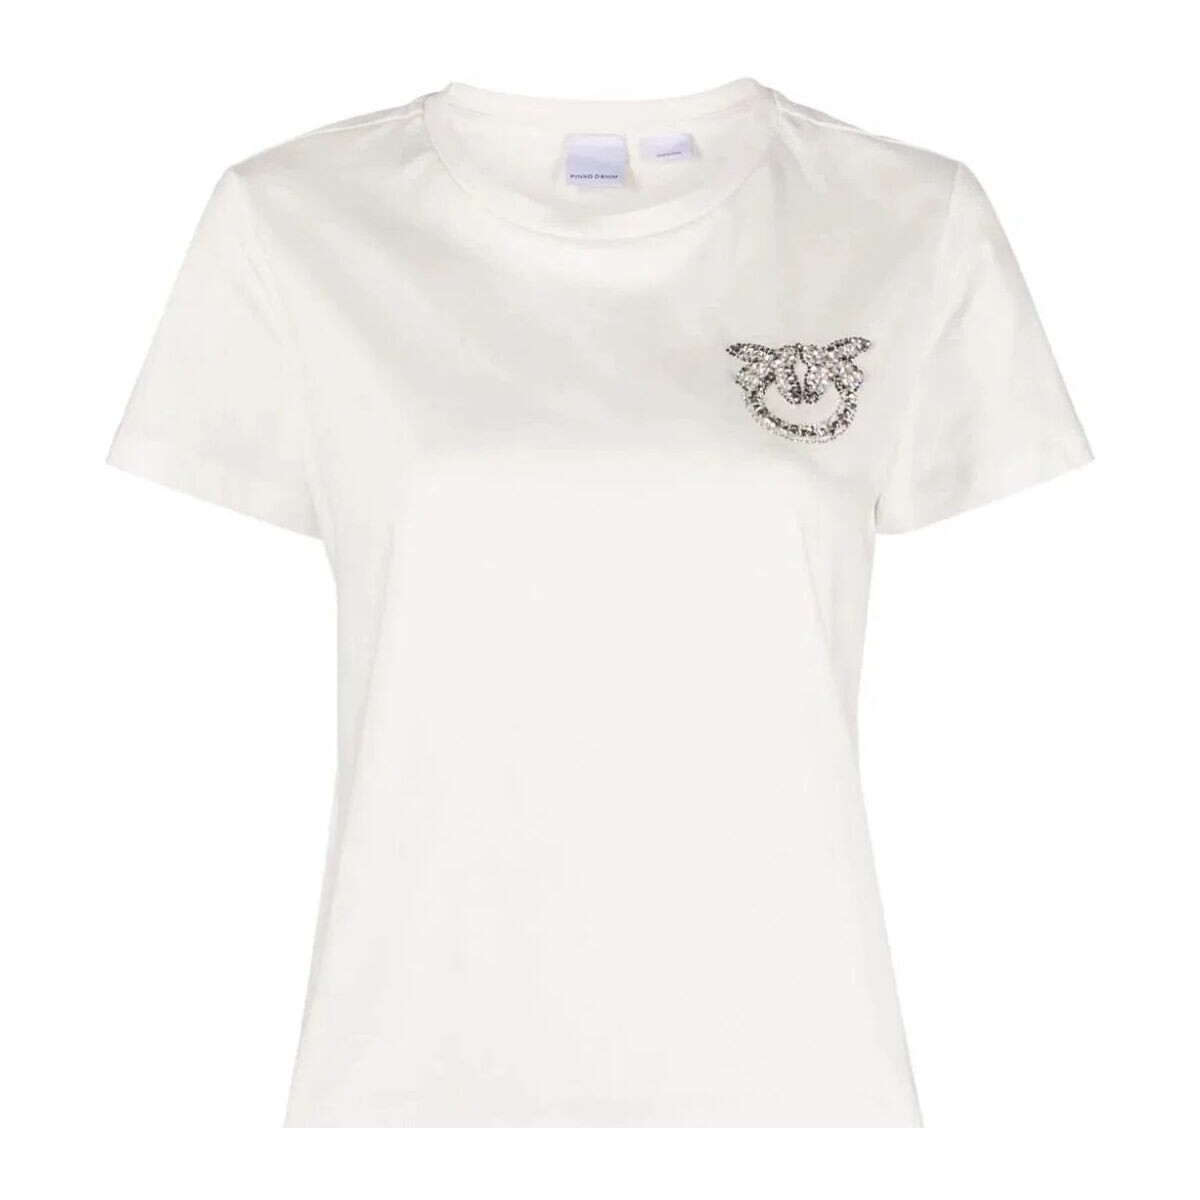 Kleidung Damen T-Shirts & Poloshirts Pinko NAMBRONE 103320 A1R7-Z15 Weiss